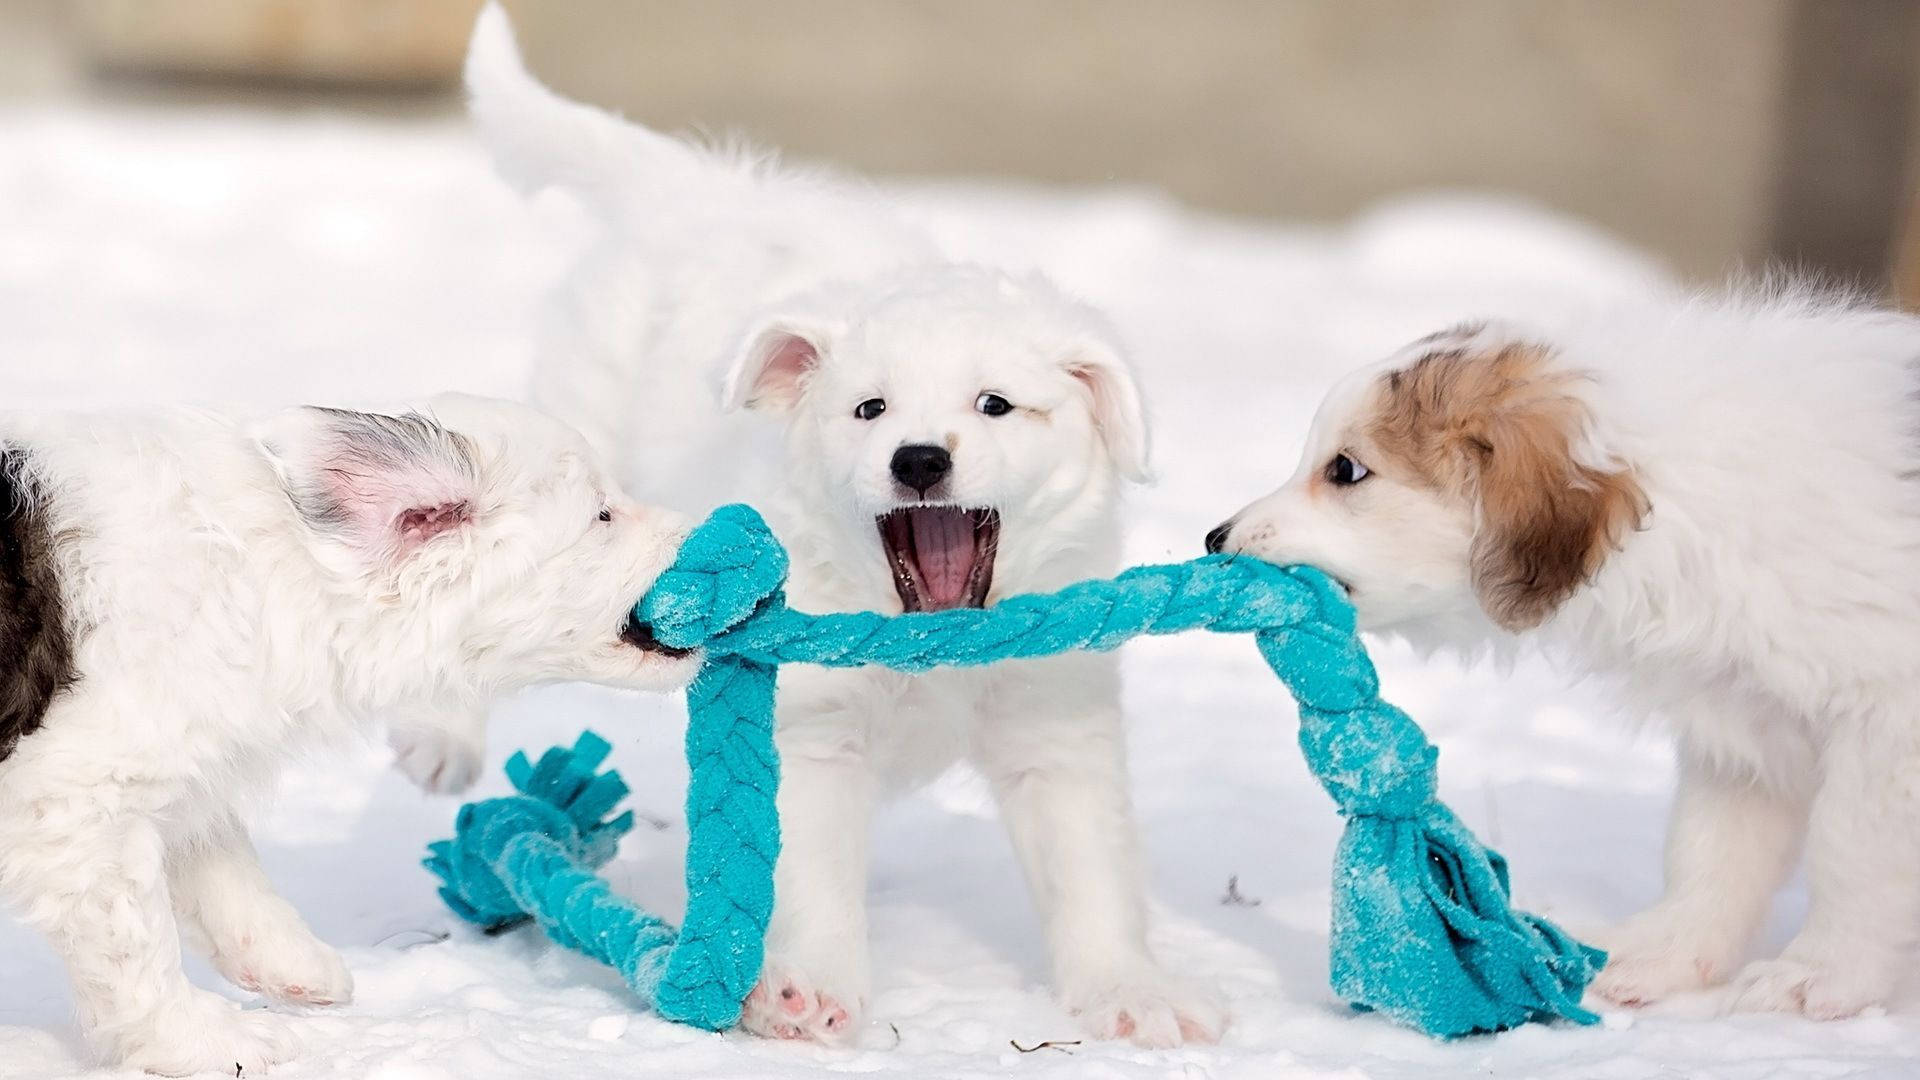 Cute Winter PuppyWallpapers